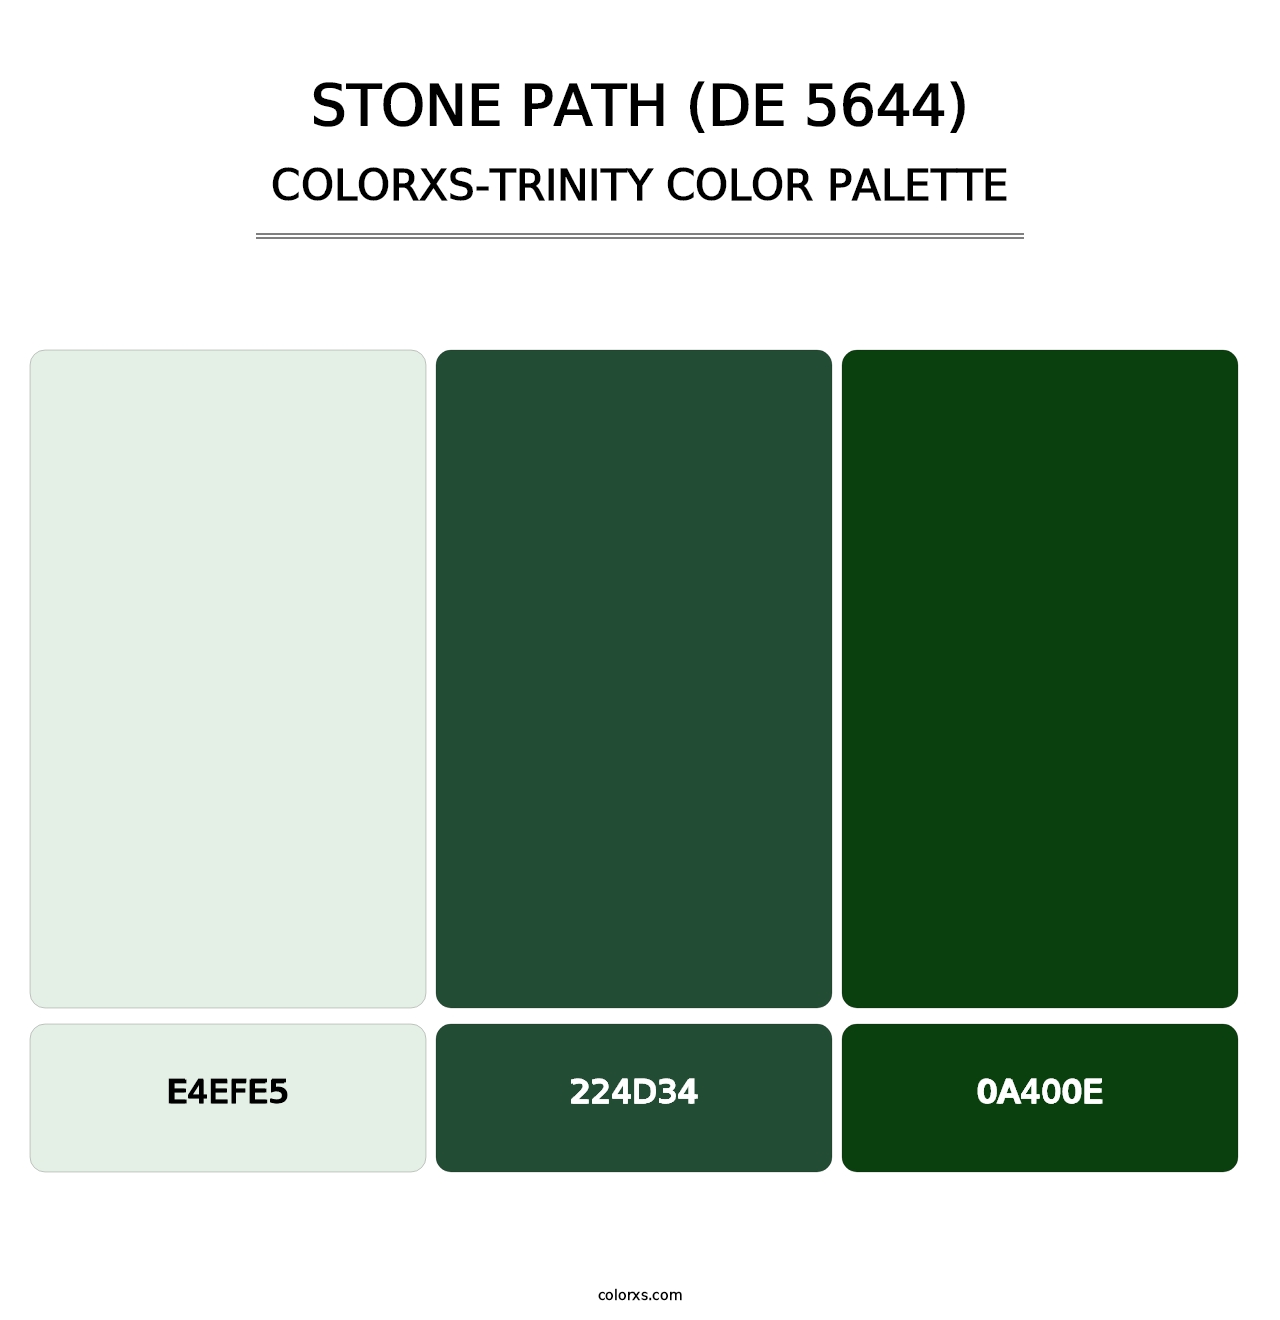 Stone Path (DE 5644) - Colorxs Trinity Palette